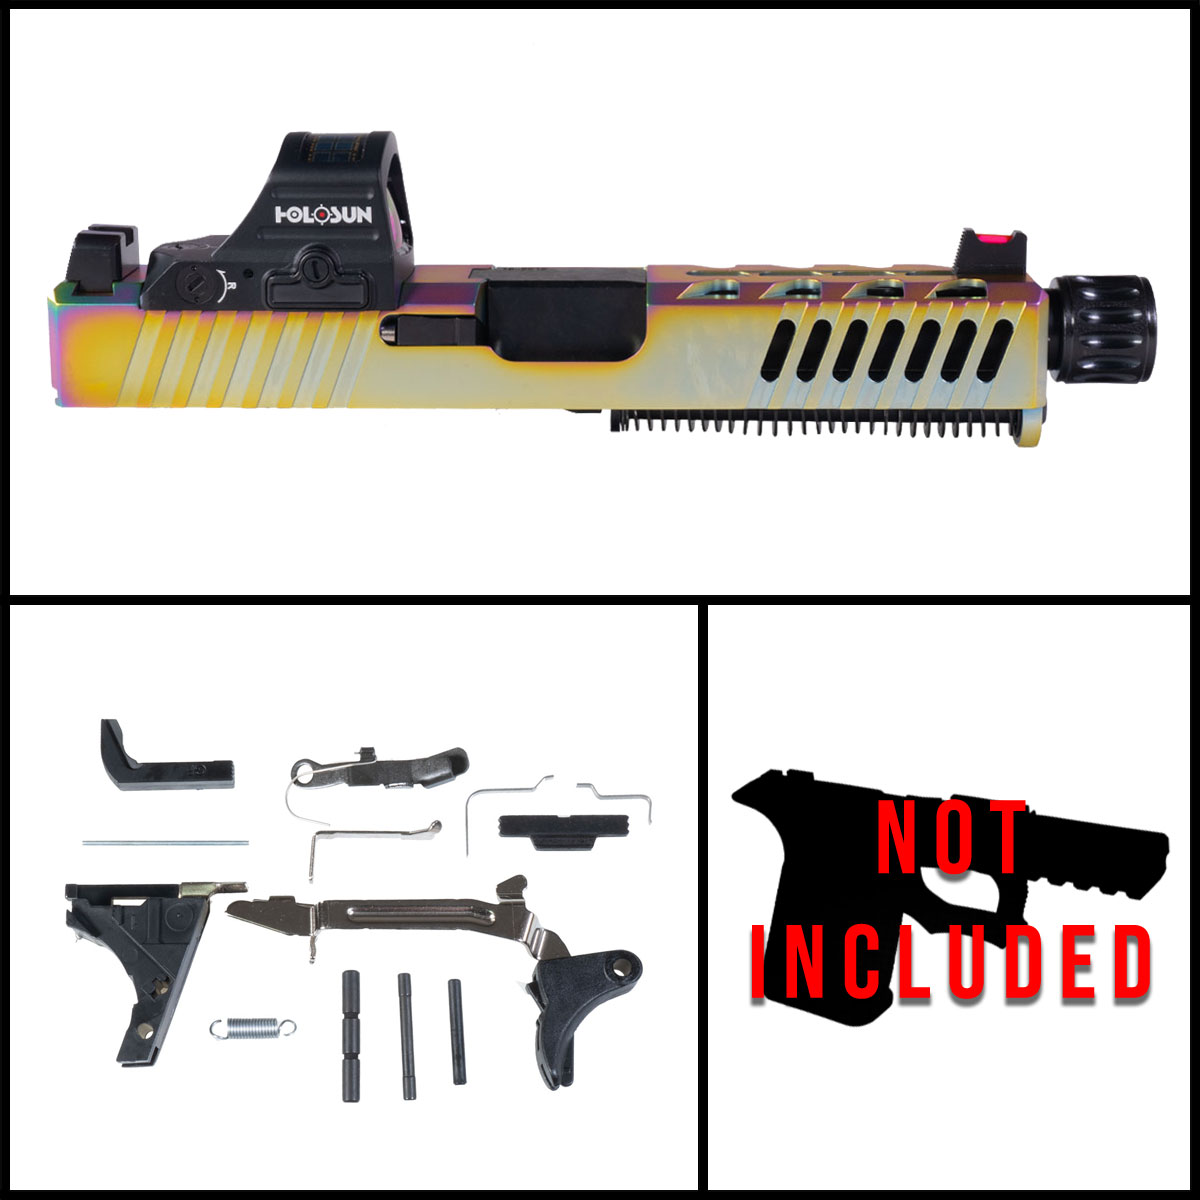 DTT 'Twilight Turbo w/ HS507C-X2' 9mm Full Pistol Build Kits (Everything Minus Frame) - Glock 19 Gen 1-3 Compatible